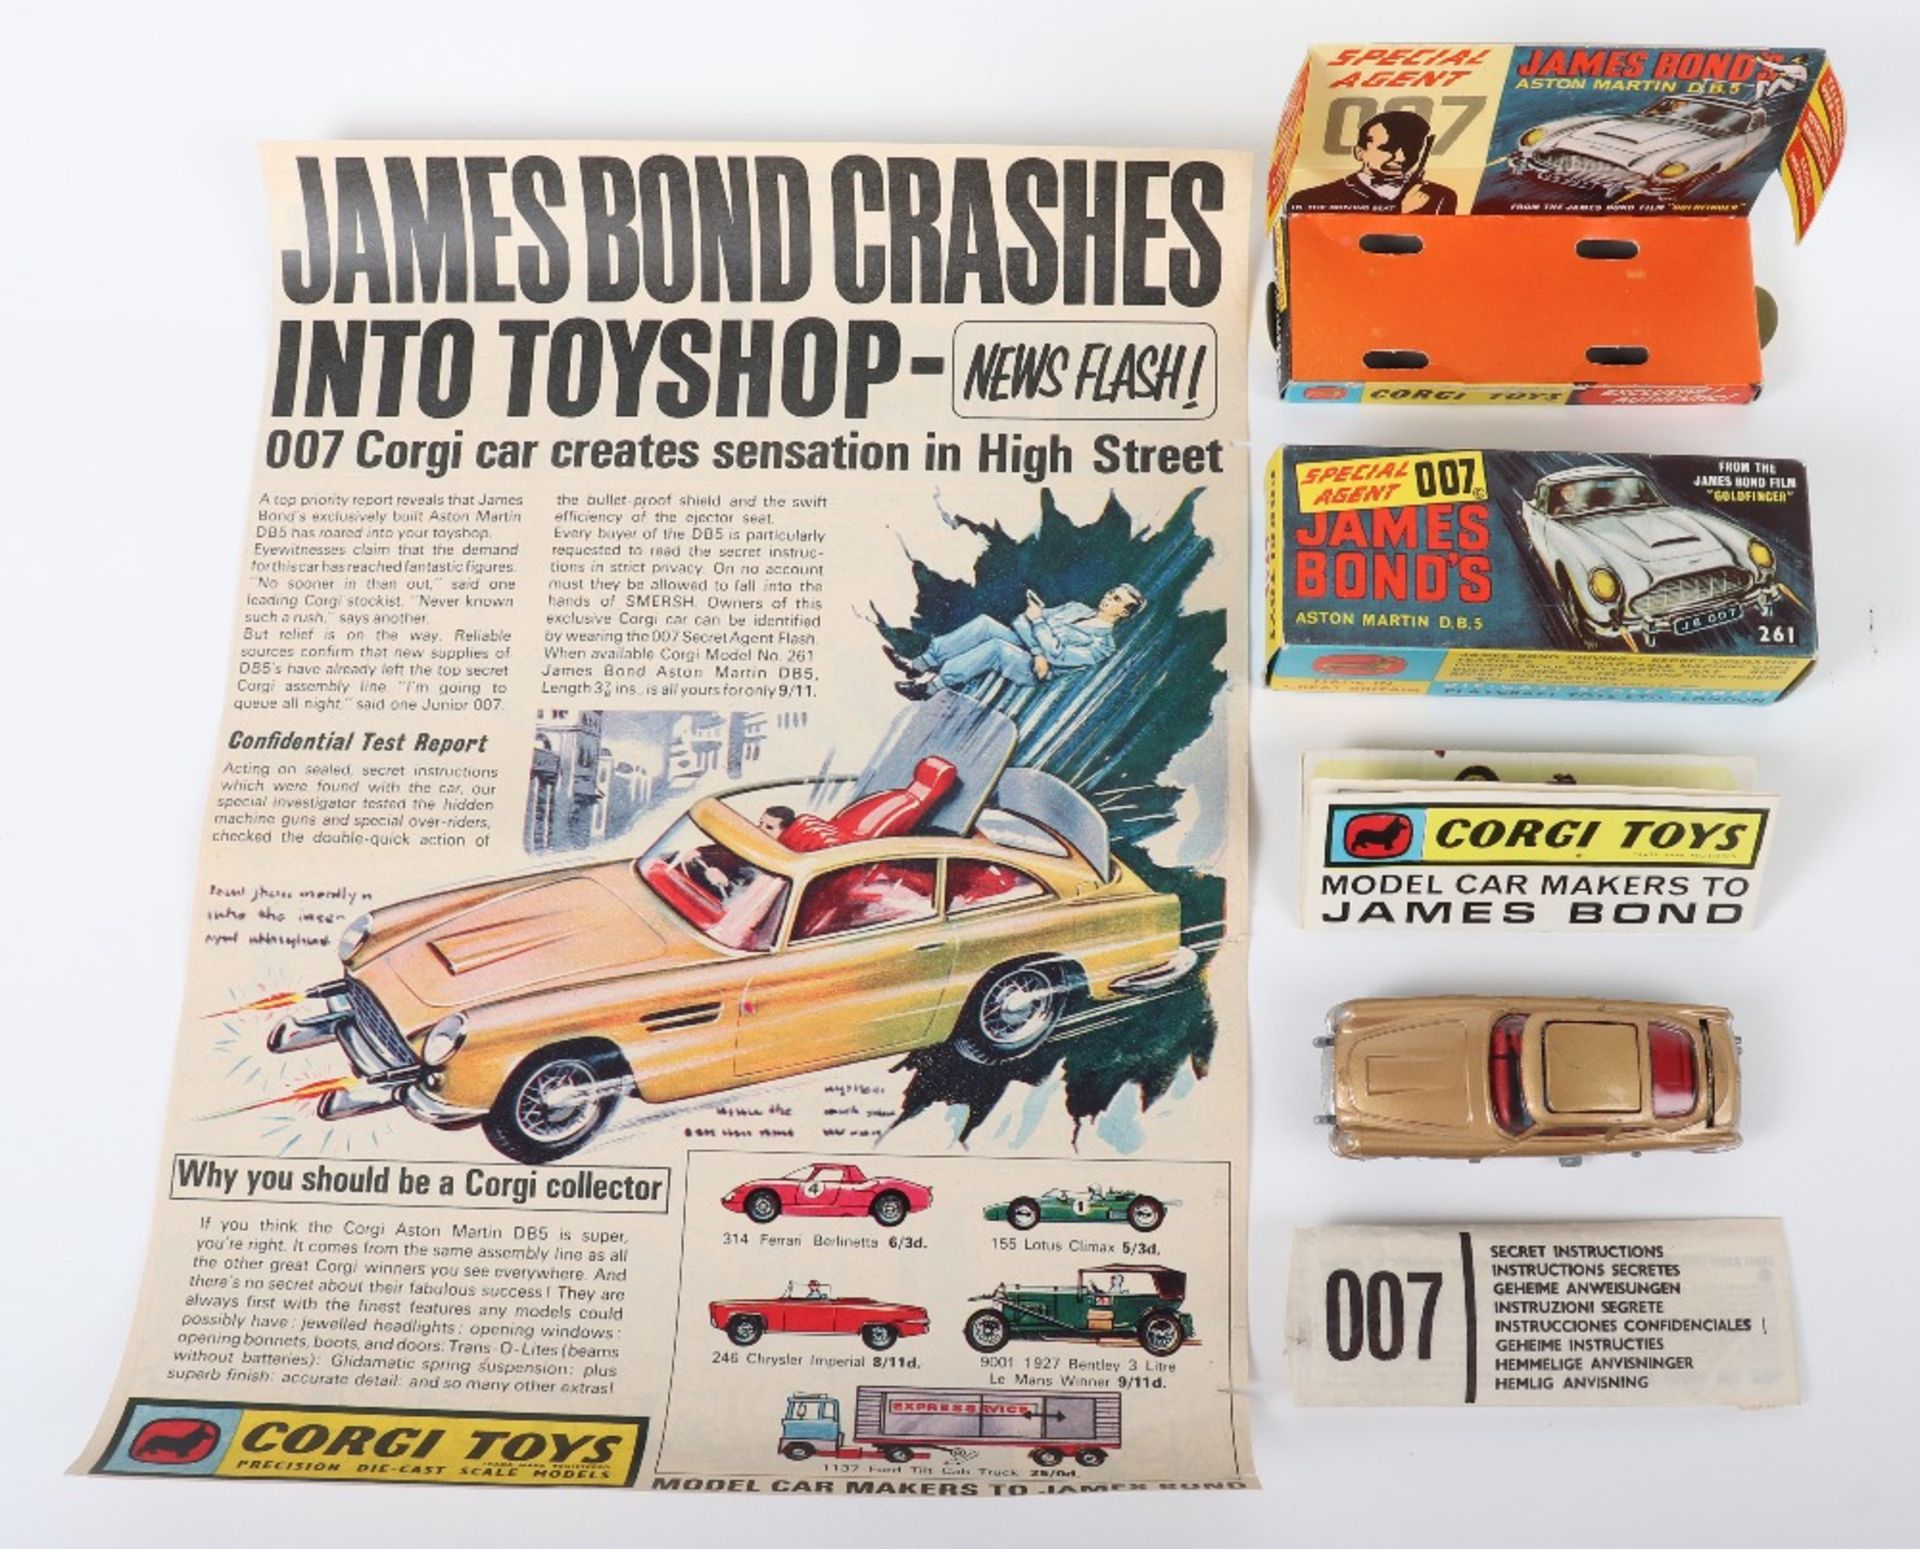 Corgi Toys 261 James Bond Aston Martin D.B.5 from the Film “Goldfinger” - Image 10 of 11